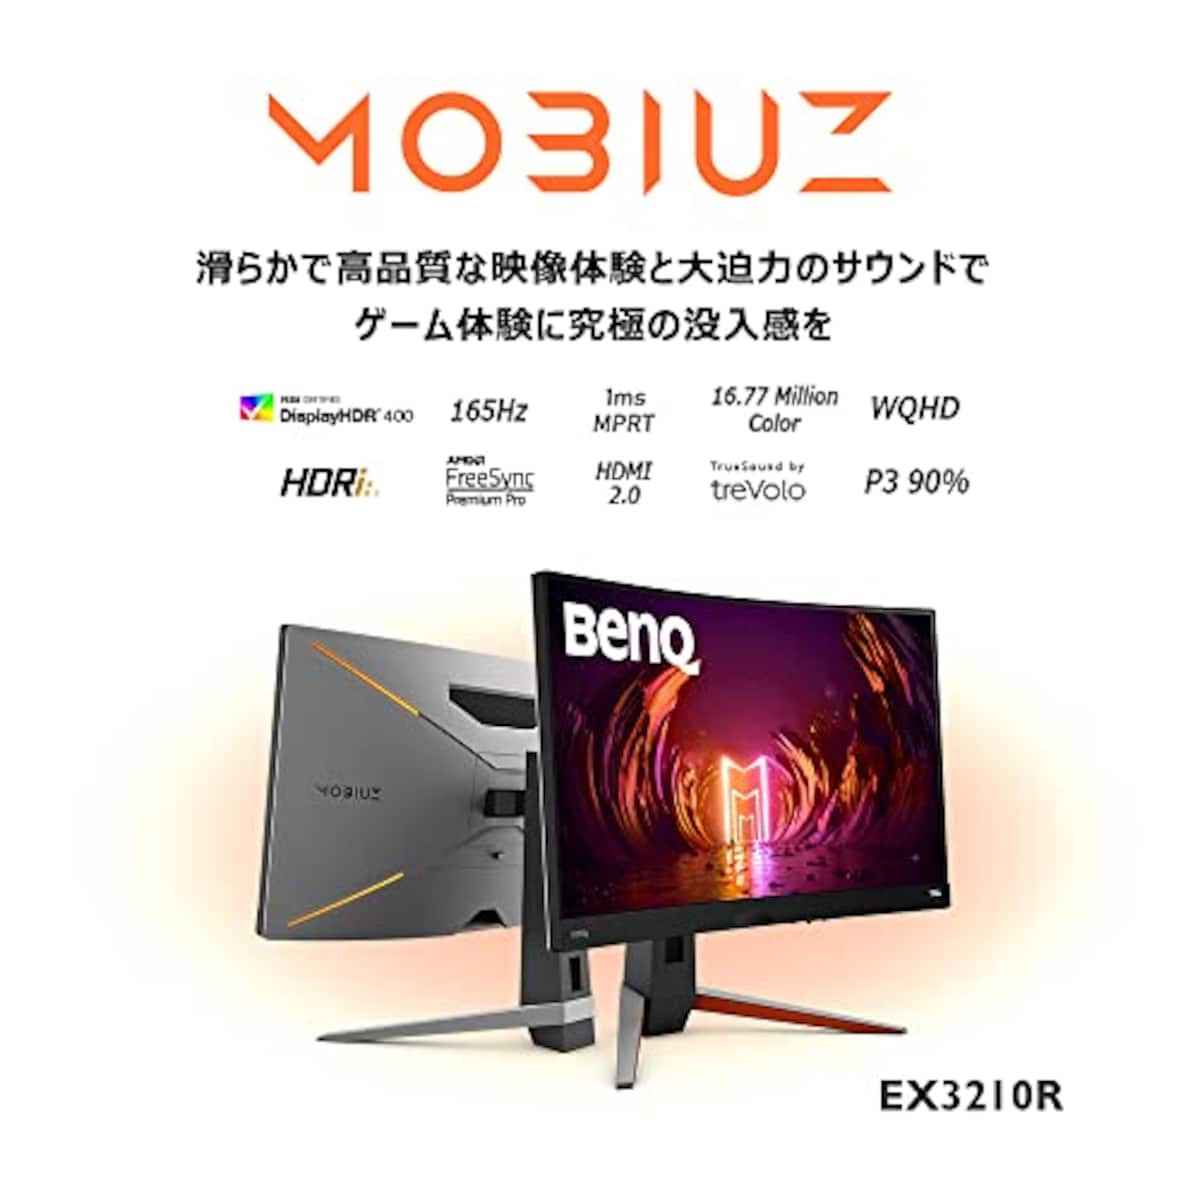  BenQ MOBIUZ EX3210R 湾曲ゲーミングモニター (31.5インチ/湾曲率1000R/165Hz/VA/WQHD/1ms/HDRi/HDR400/FreeSync Premium Pro 2.1ch treVoloスピーカー/高機能スタンド/リモコン付属/ゲームモード(FPS/RPG/レーシング)画像2 